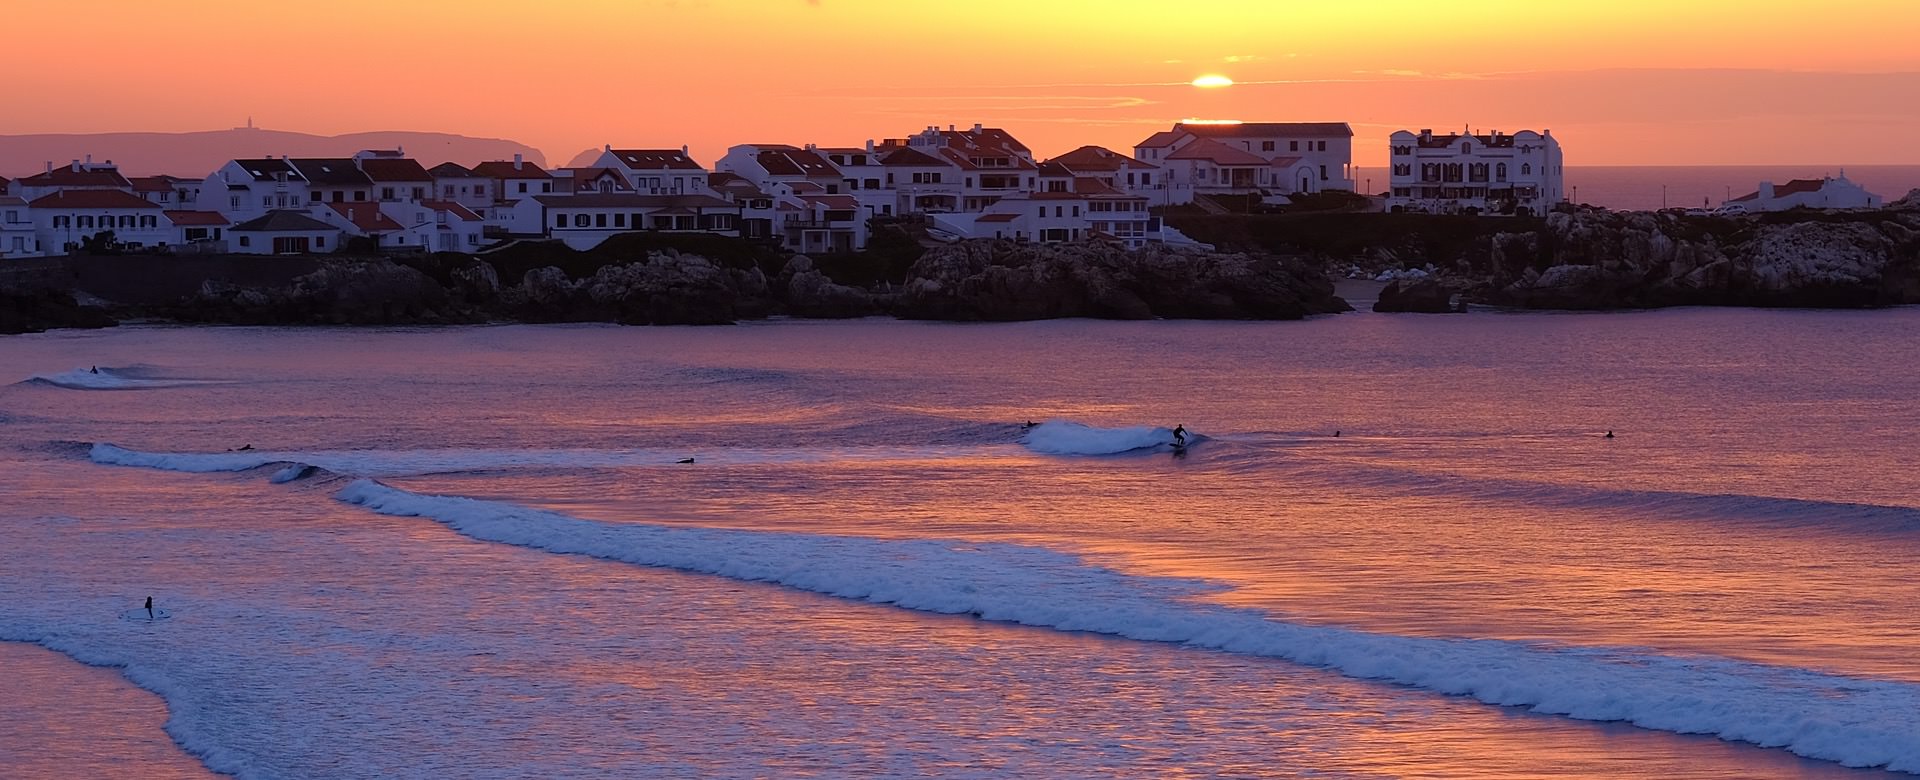 Sunset Surf in Baleal, Peniche